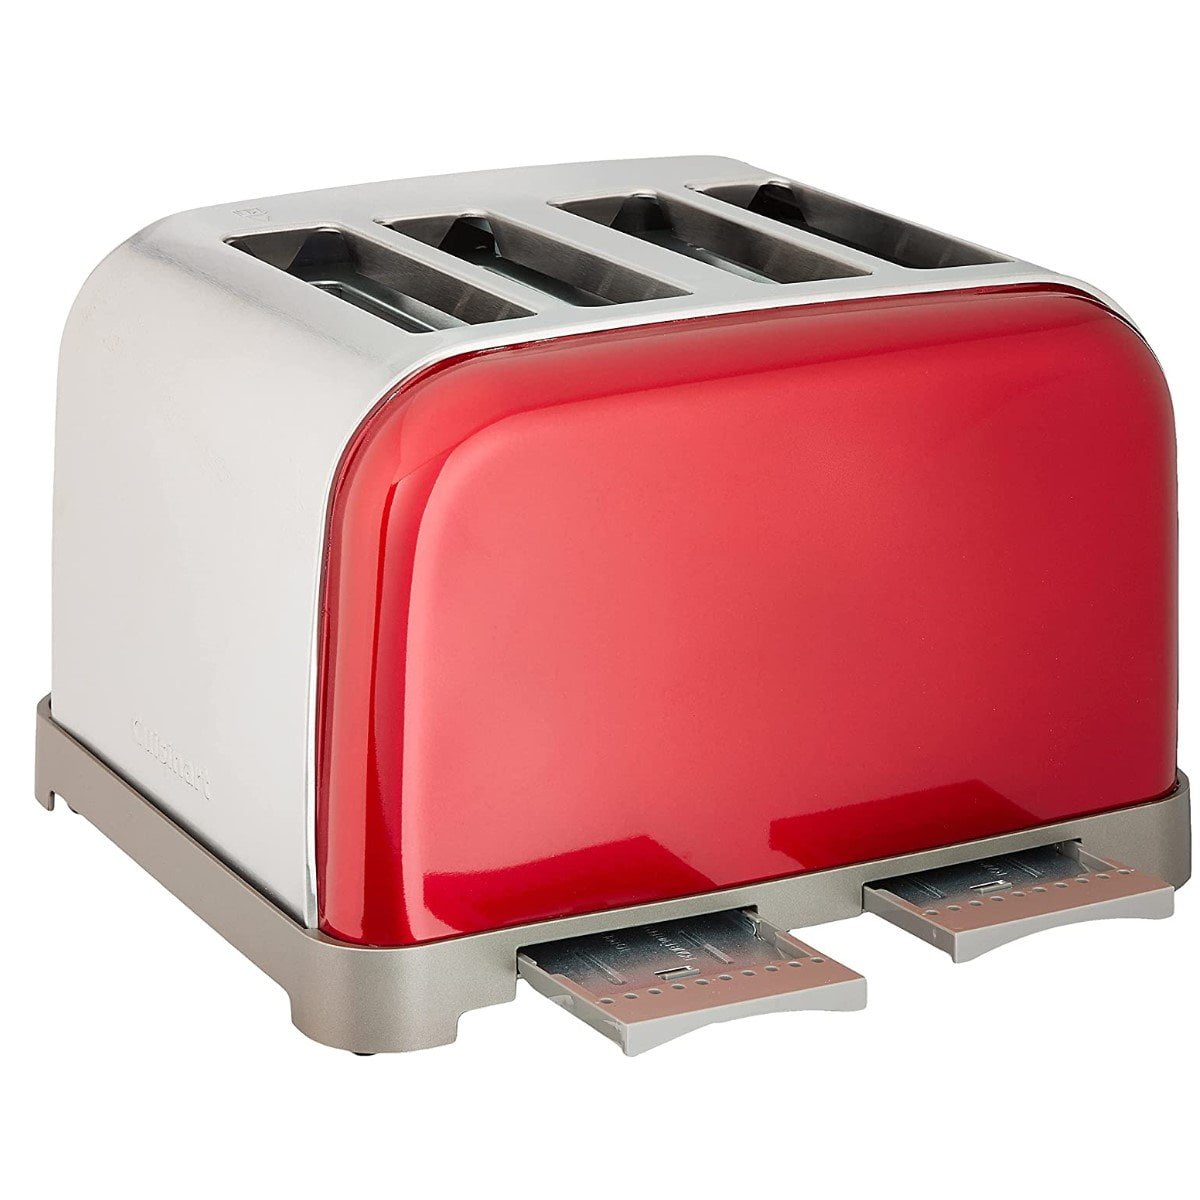 Cuisinart® Stainless Steel 4-Slice Metal Toaster, 1 ct - Fry's